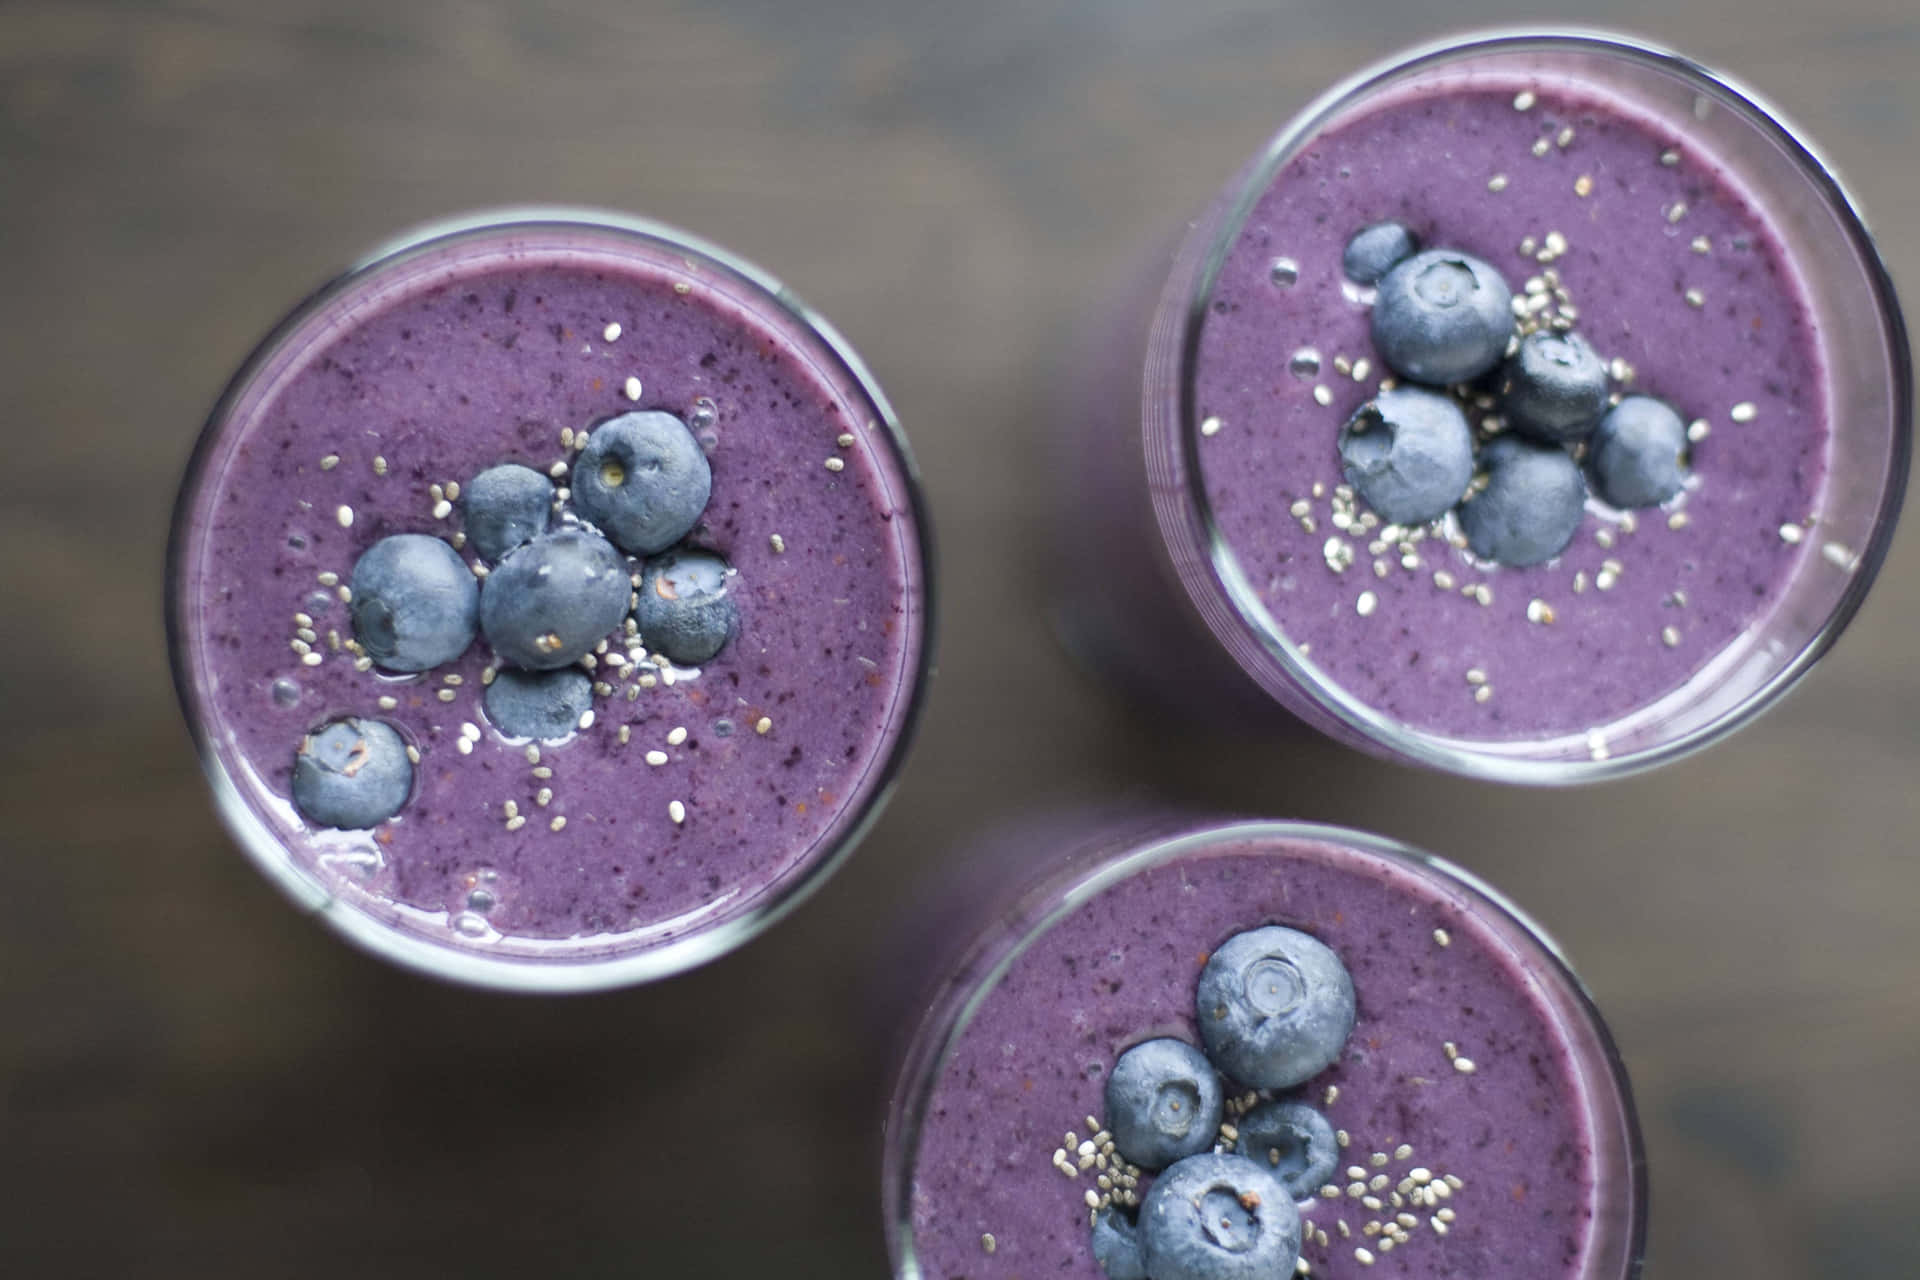 Enjoy a delicious&refreshing Blueberry Smoothie Wallpaper